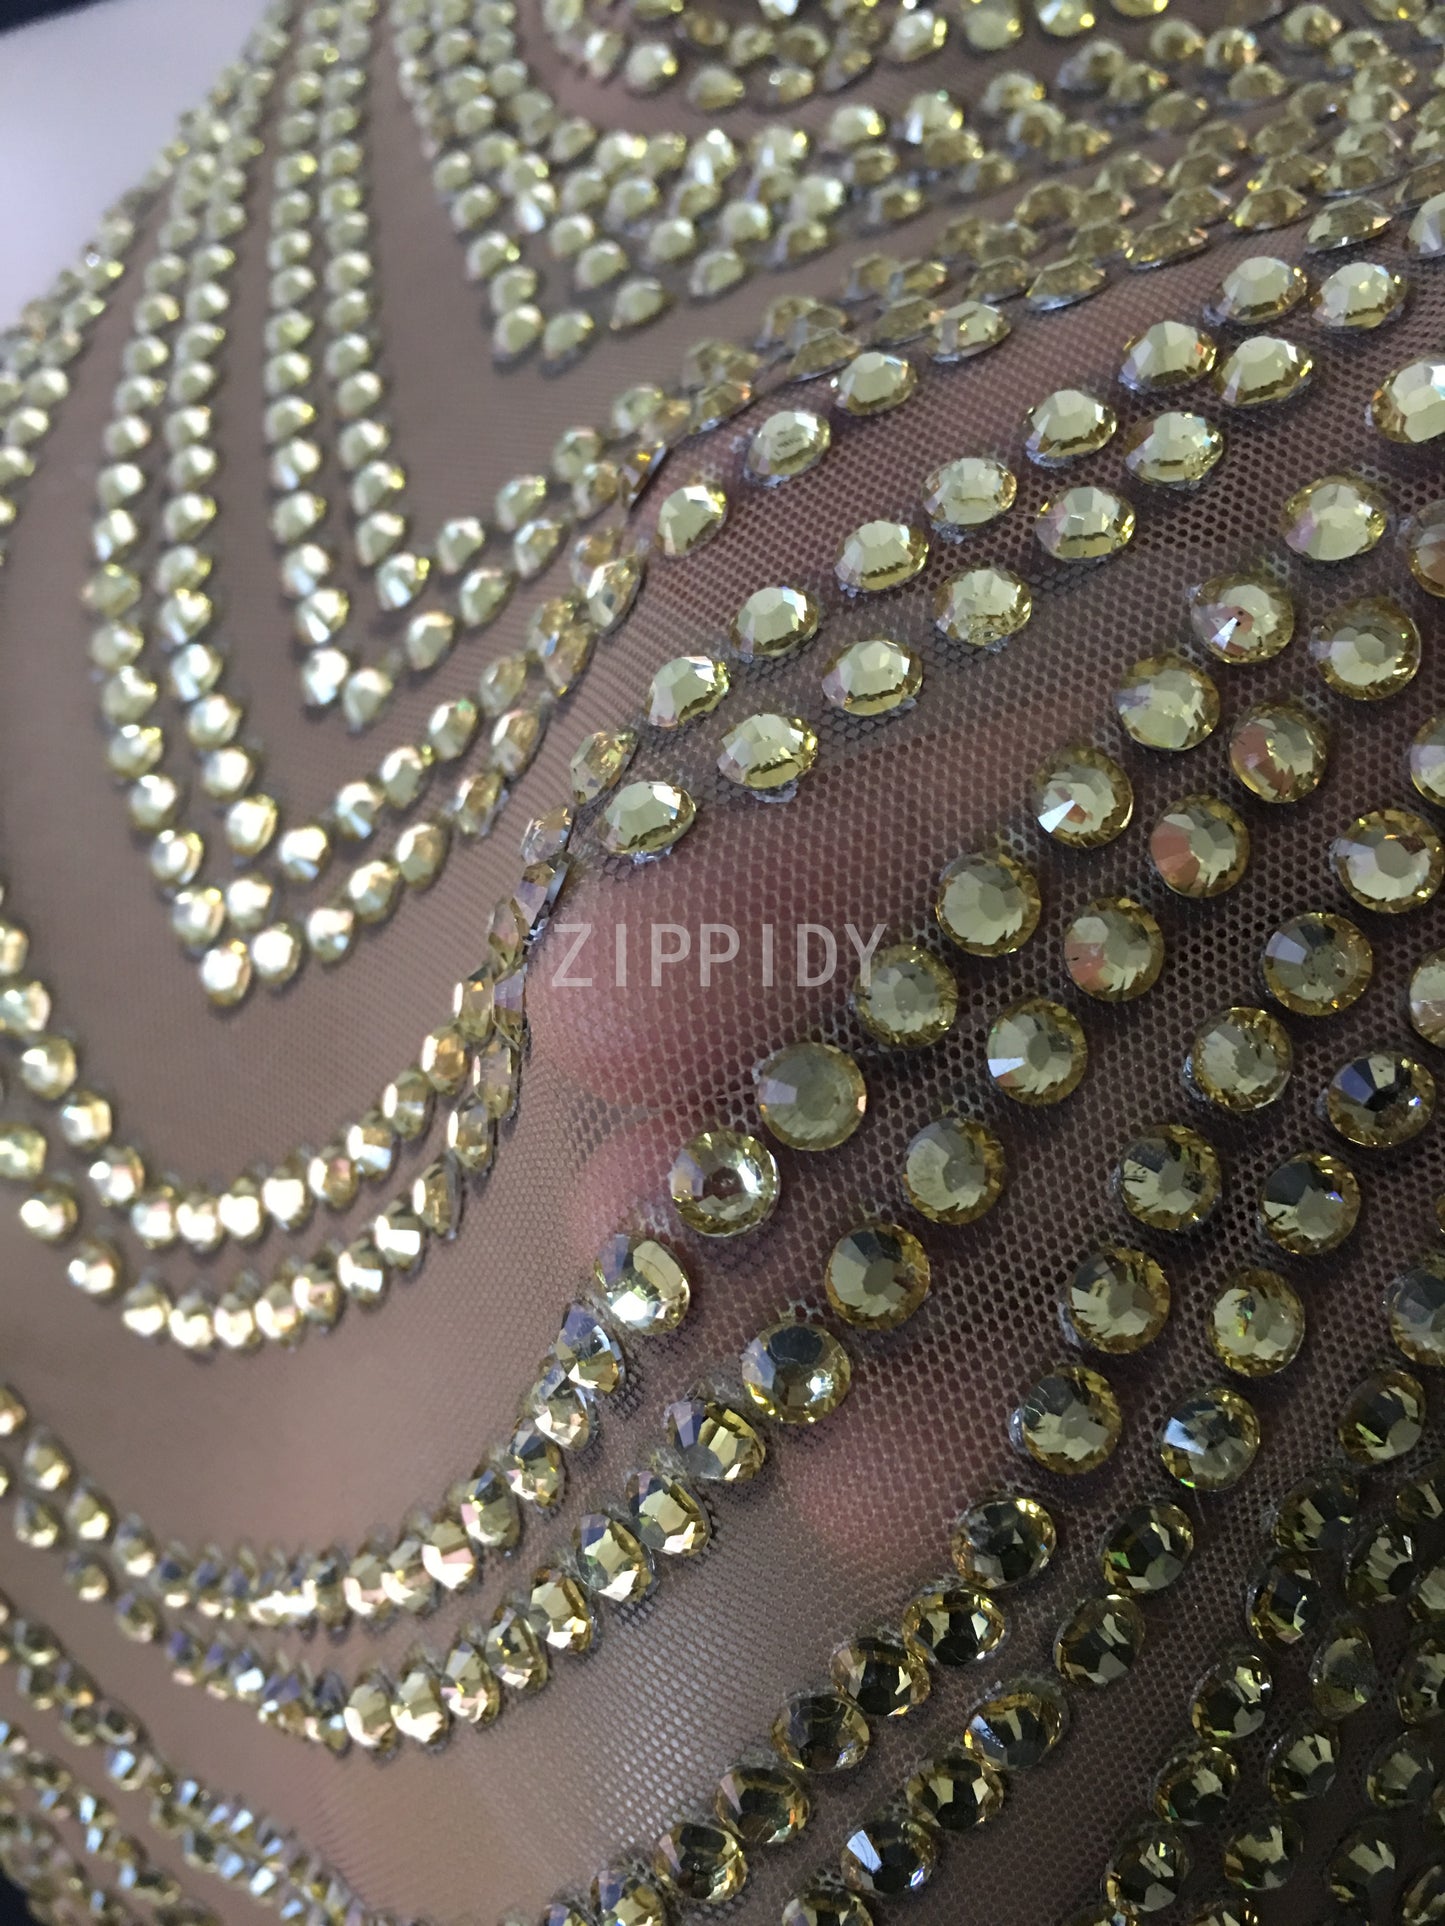 Full Gold Rhinestones Transparent Mesh Long Dress Women Birthday Celebrate